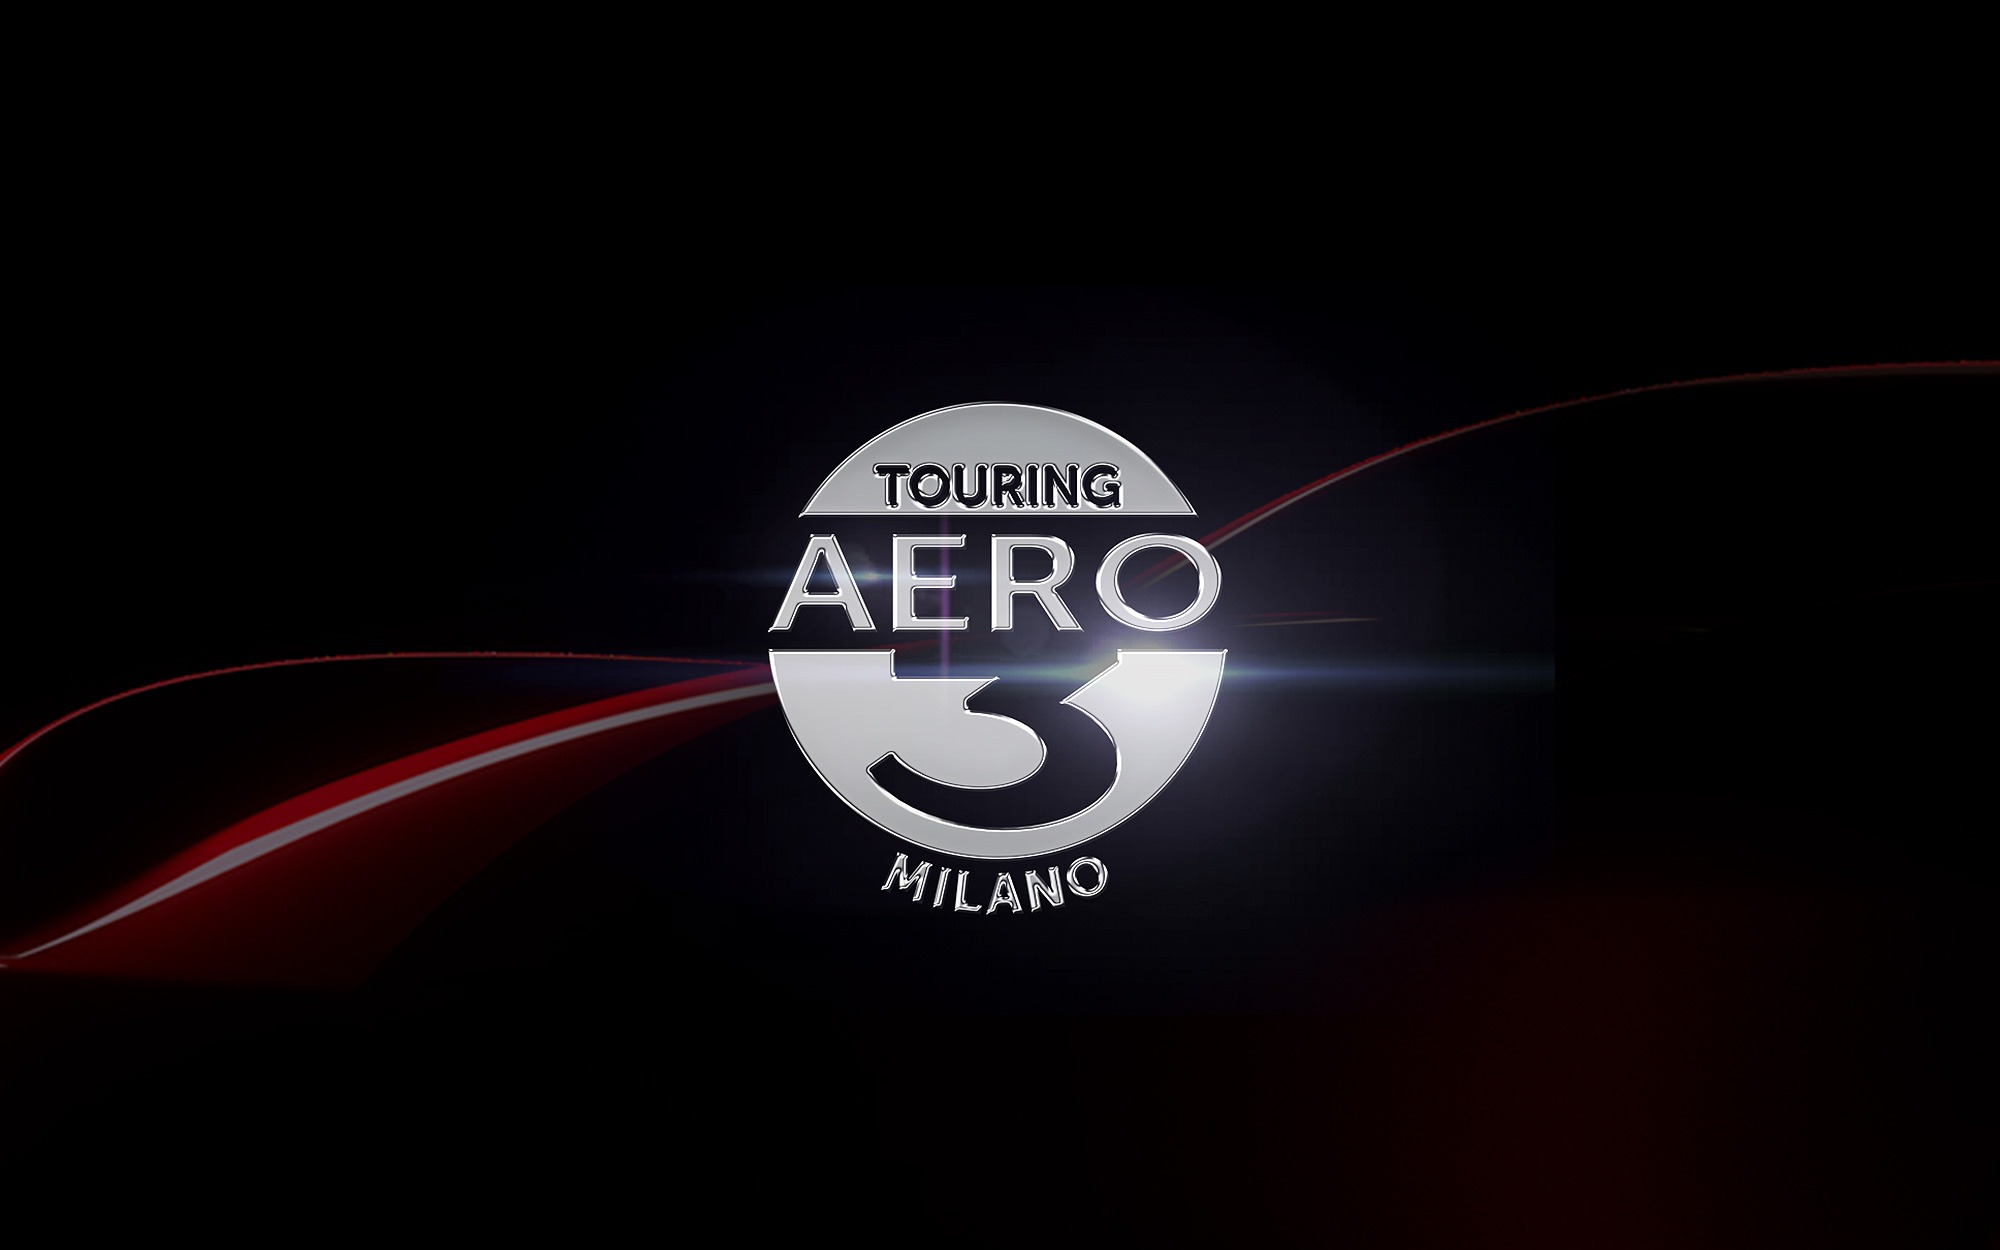 Touring Superleggera Aero3 will be unveiled in September